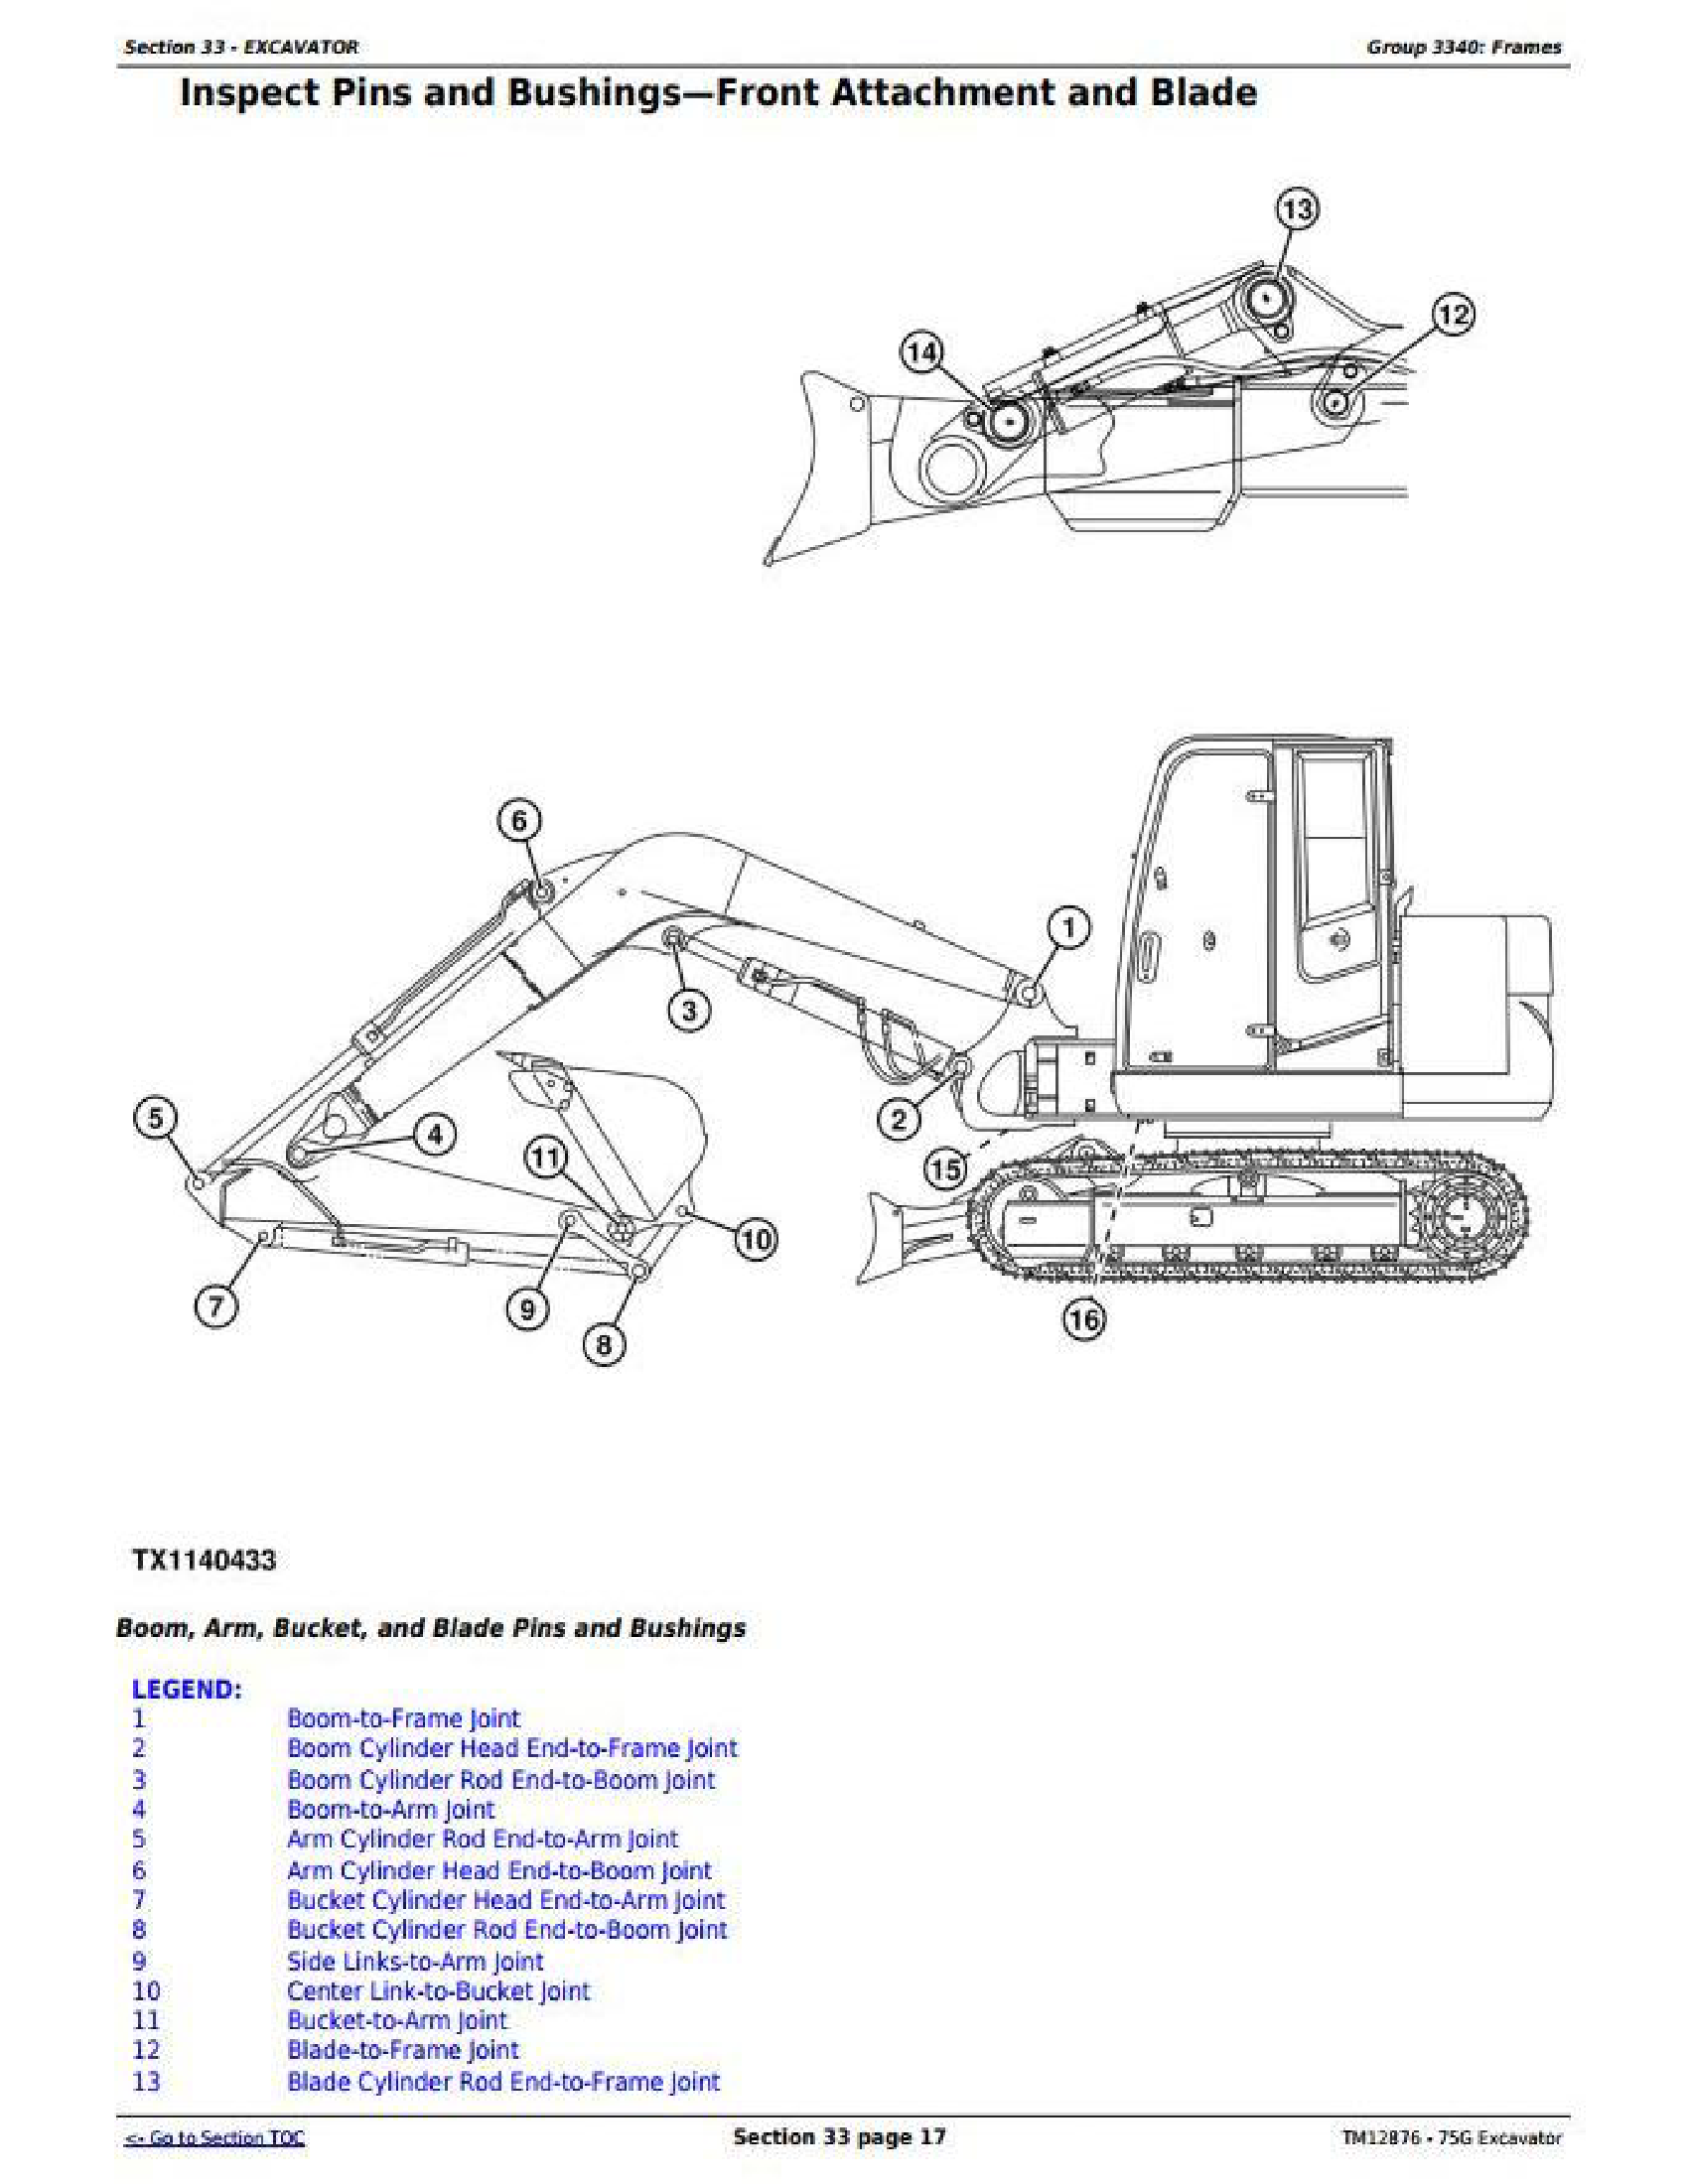 John Deere CH330 manual pdf